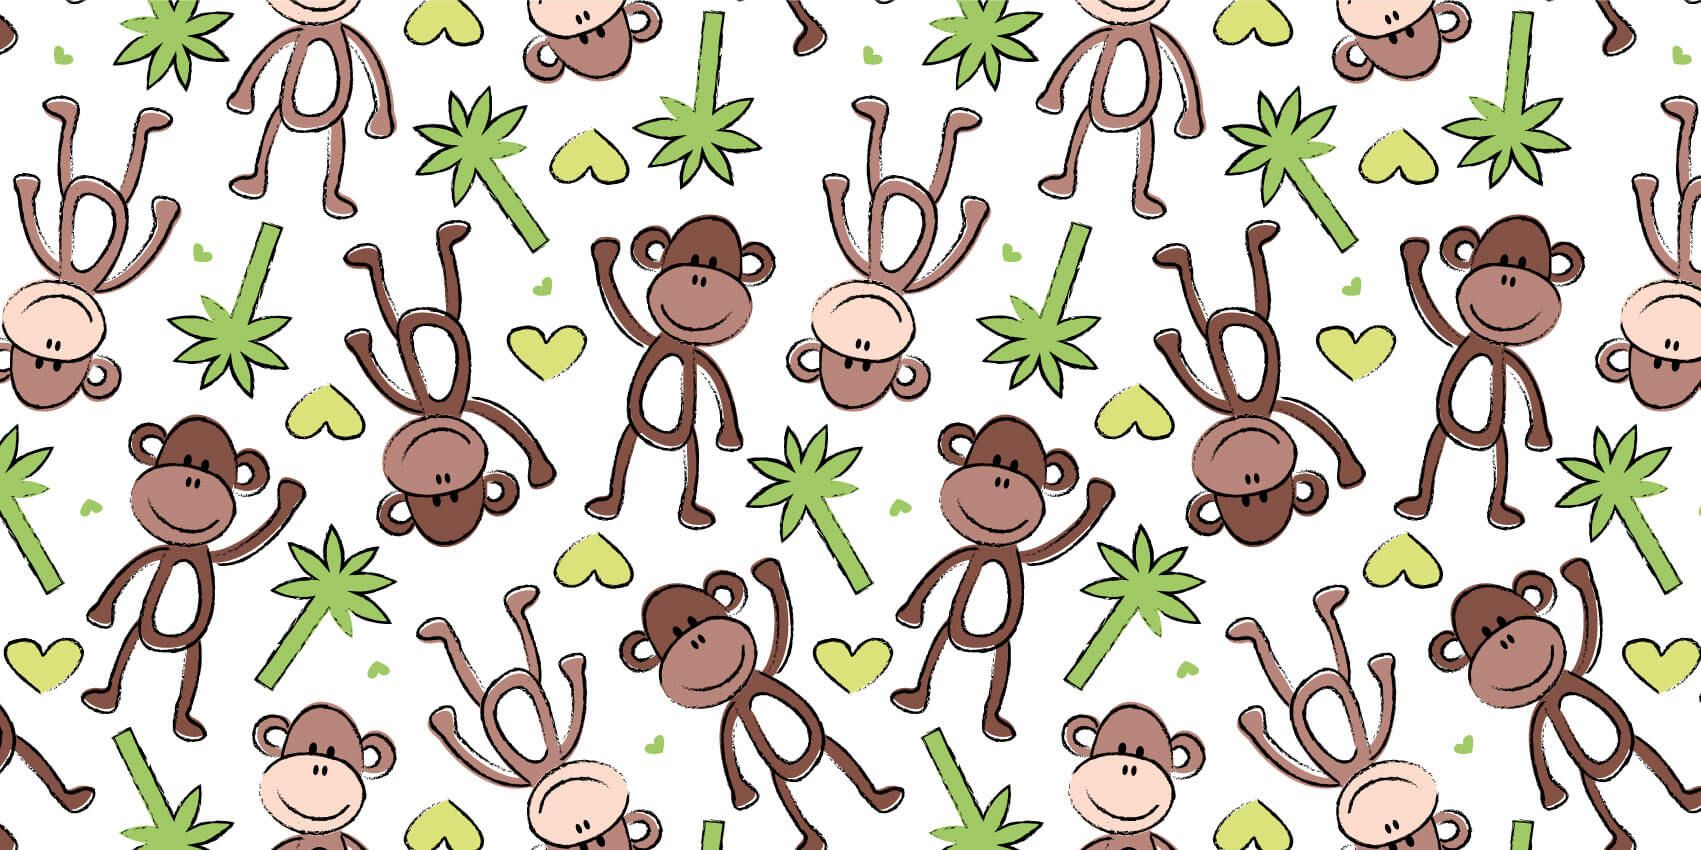 Aquatic Animals - Monkeys and palm trees - Children's room